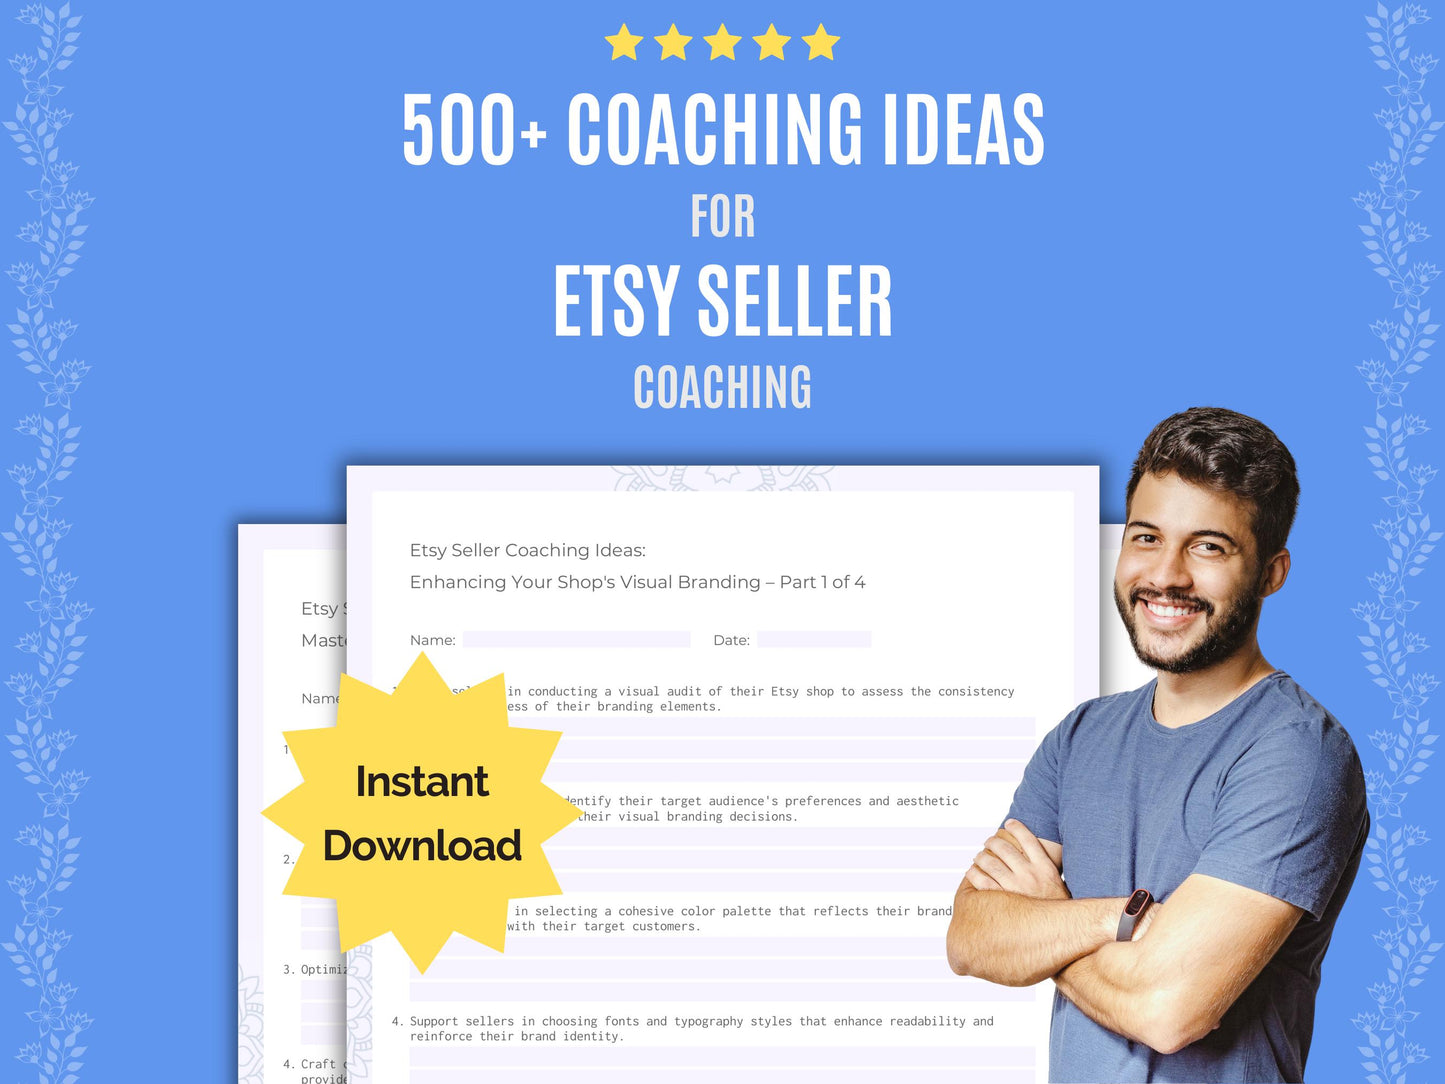 Etsy Seller Coaching Ideas